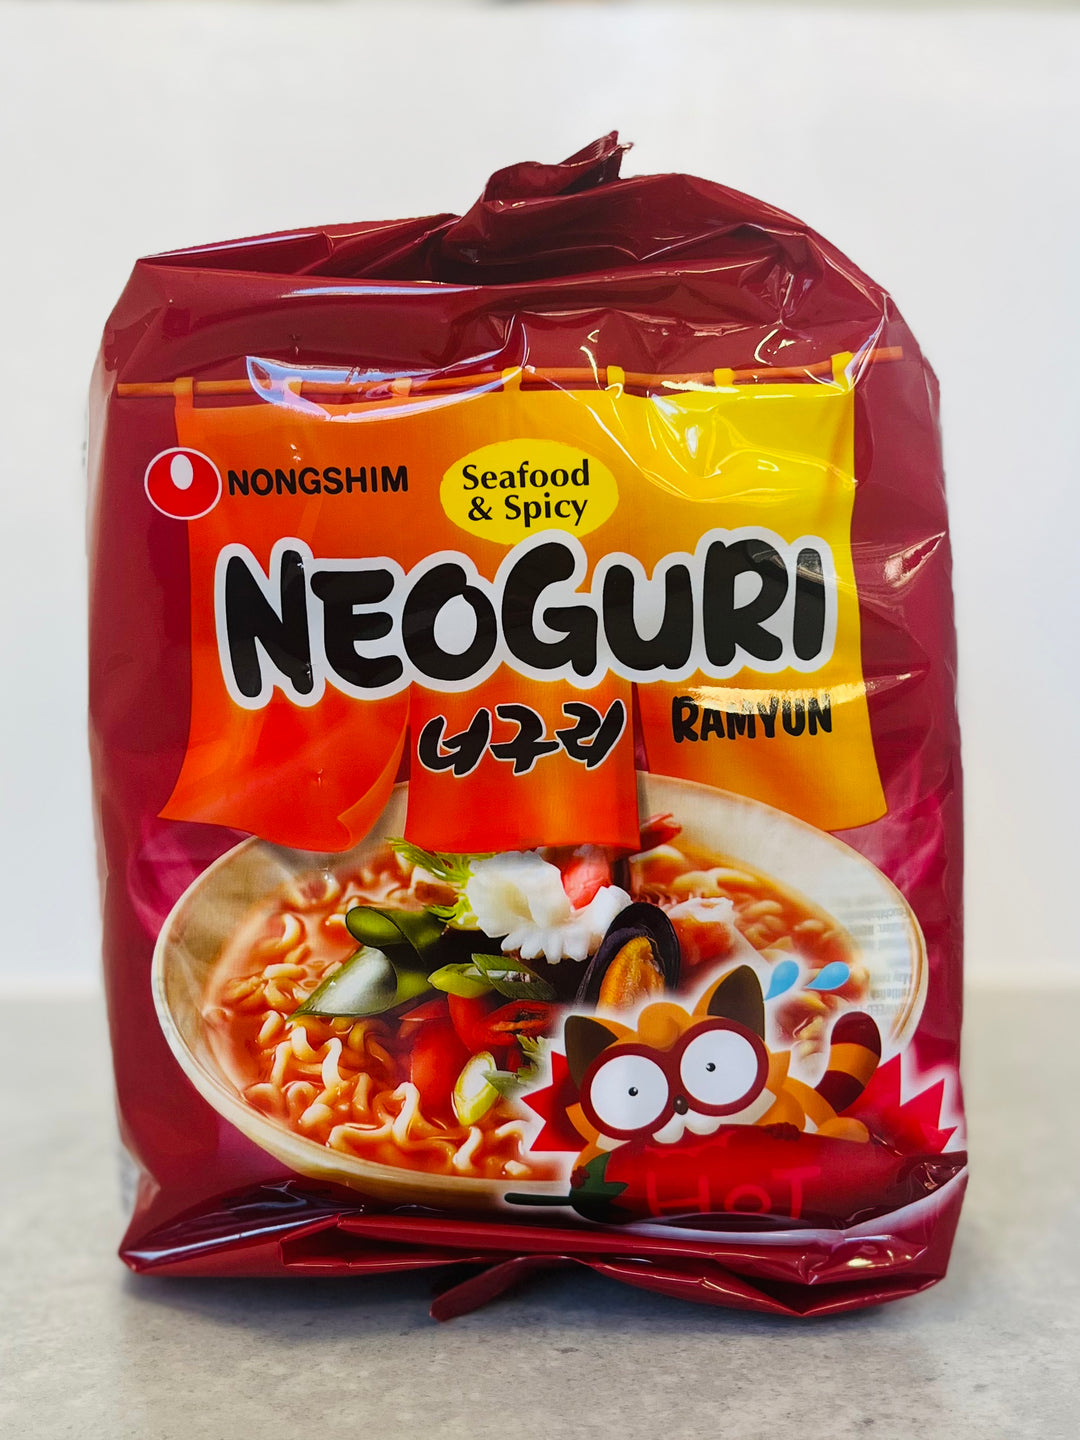 NongShim Neoguri Seafood & Spicy Ramen 5pcks 600g